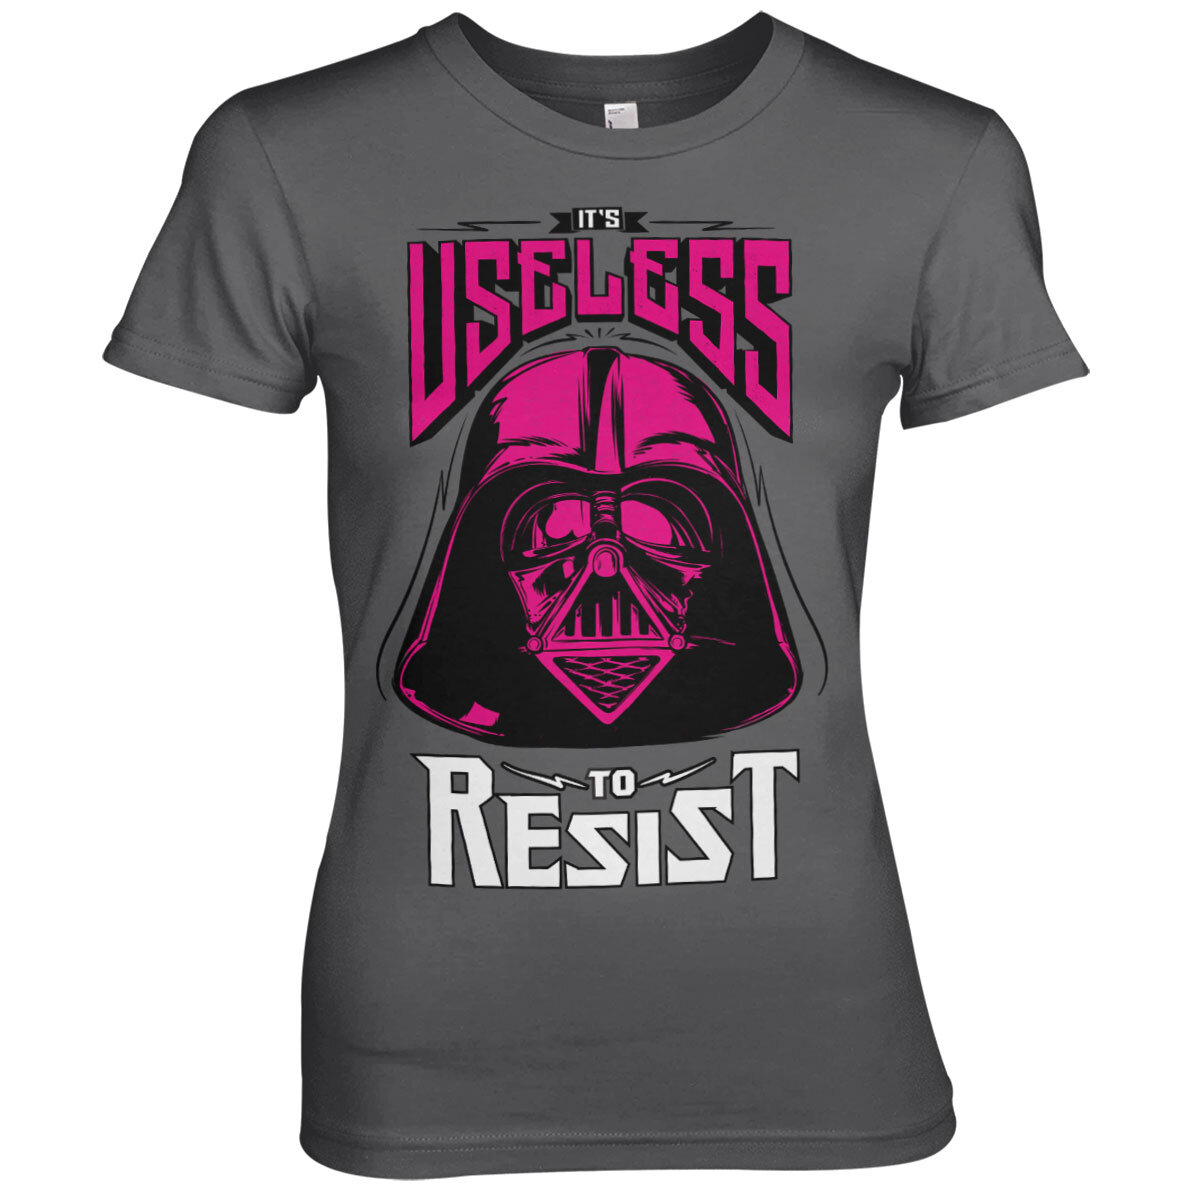 Vader - Useless To Resist Girly Tee